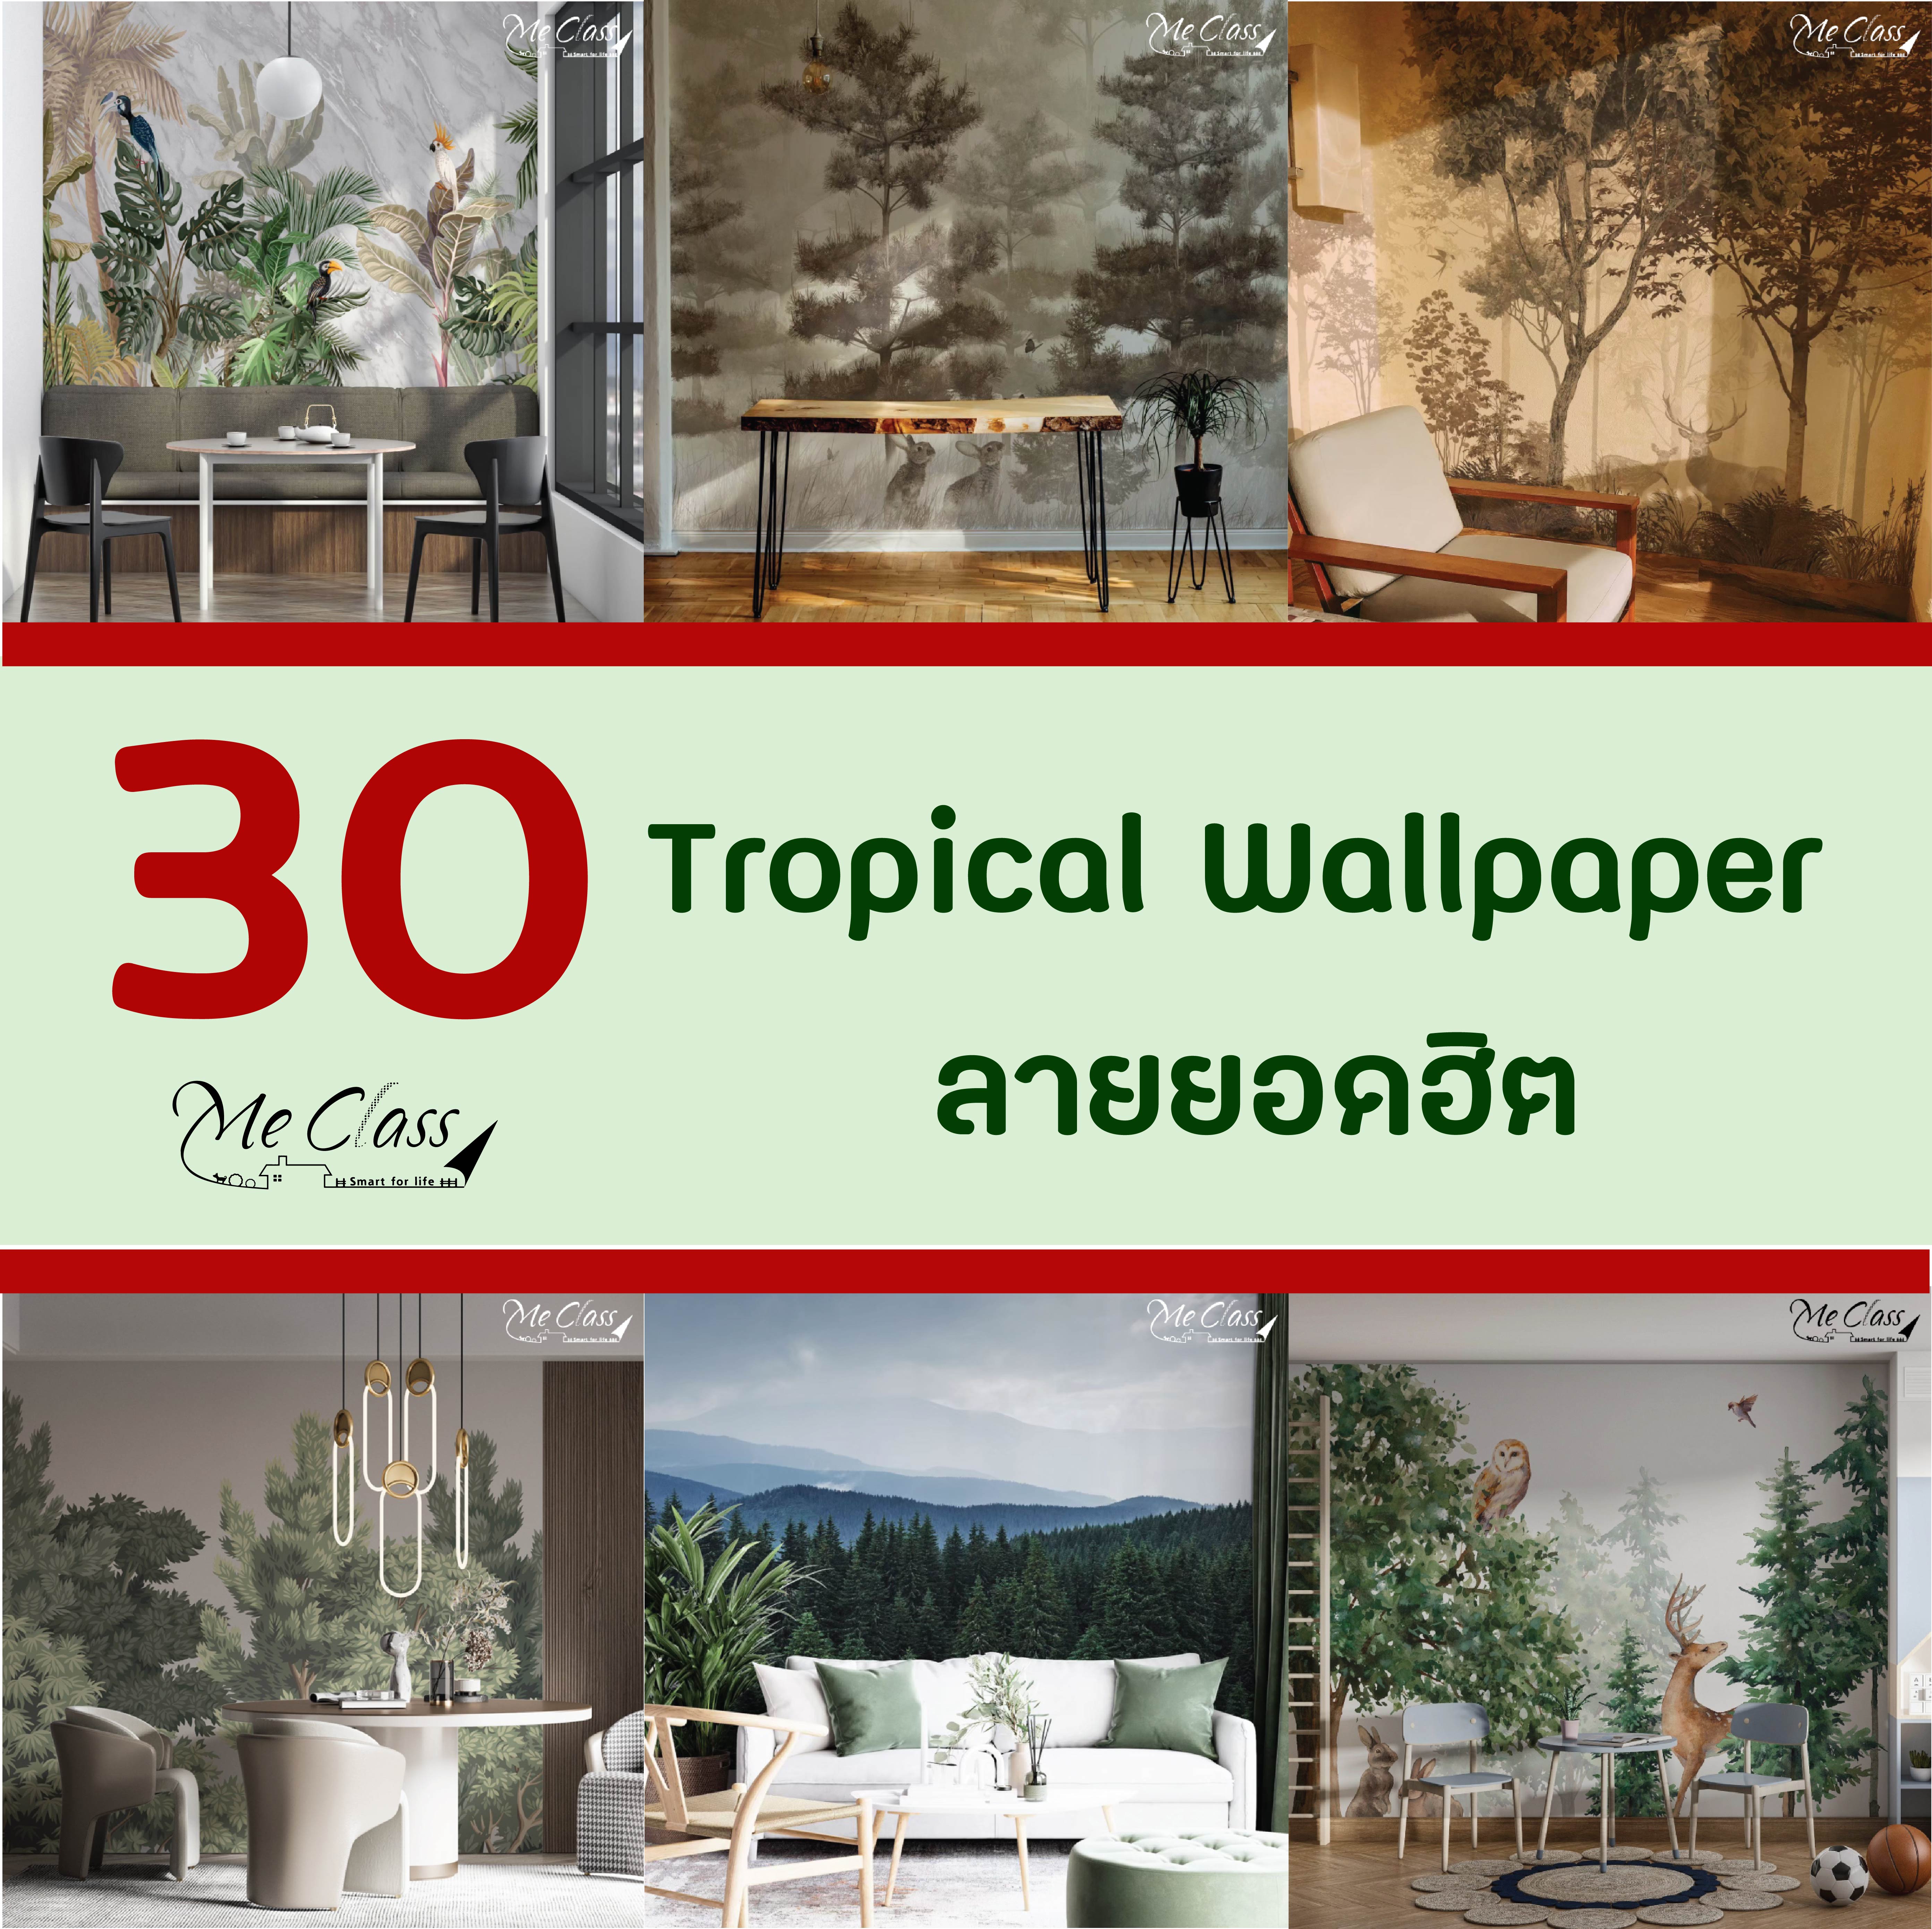 30 Tropical Wallpaper ลายยอดฮิต